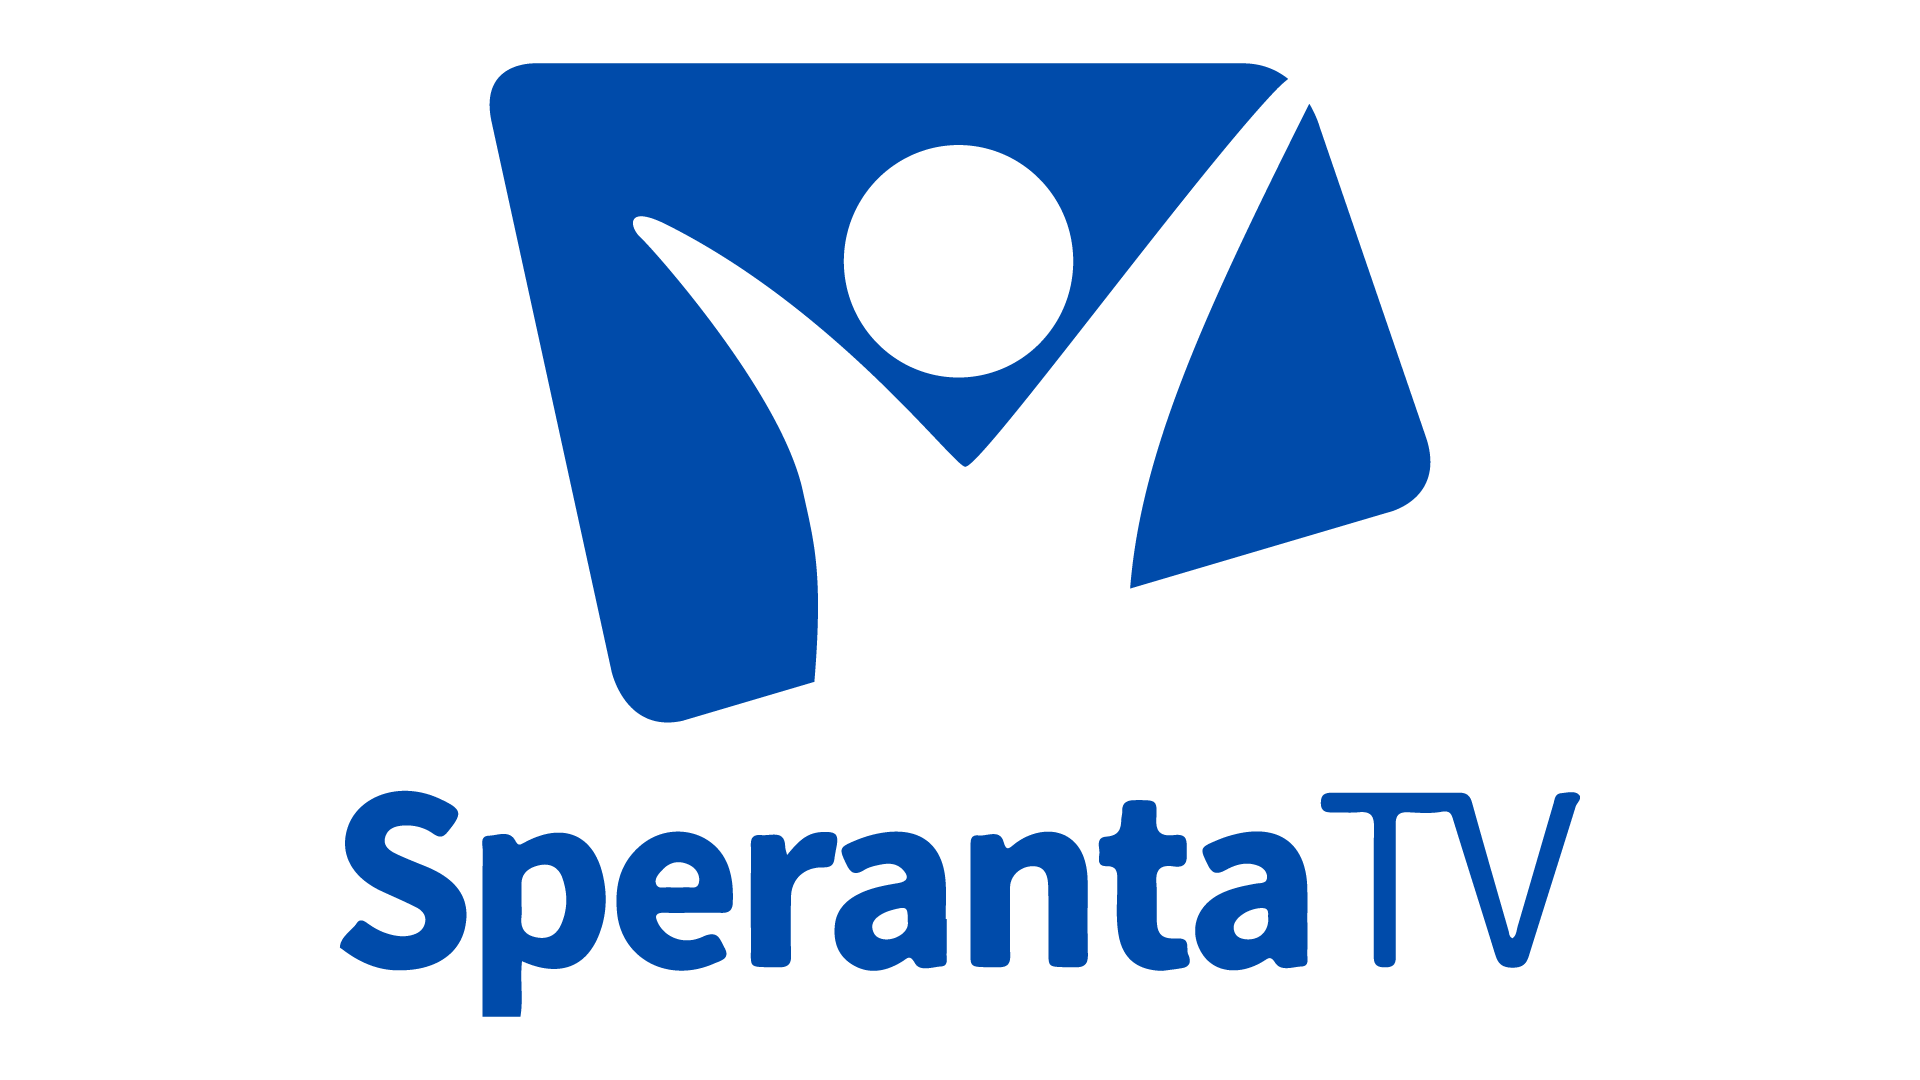 Speranta TV Live TV, Online